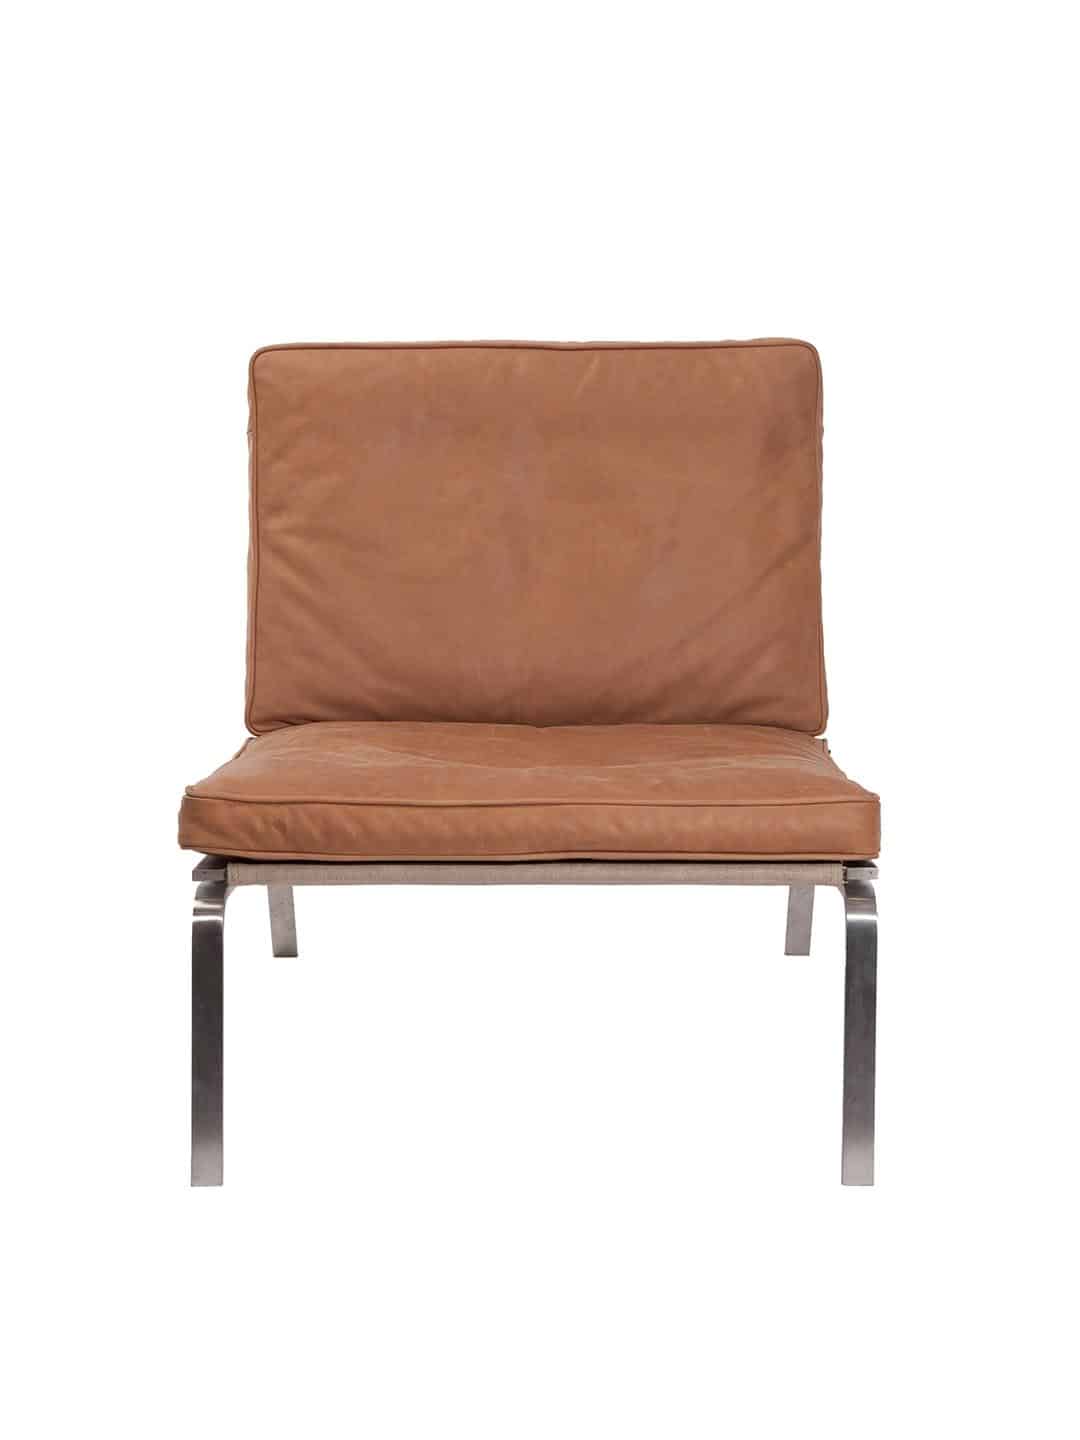 Красивое кресло NORR11 Man из кожи желто-коричневого цвета